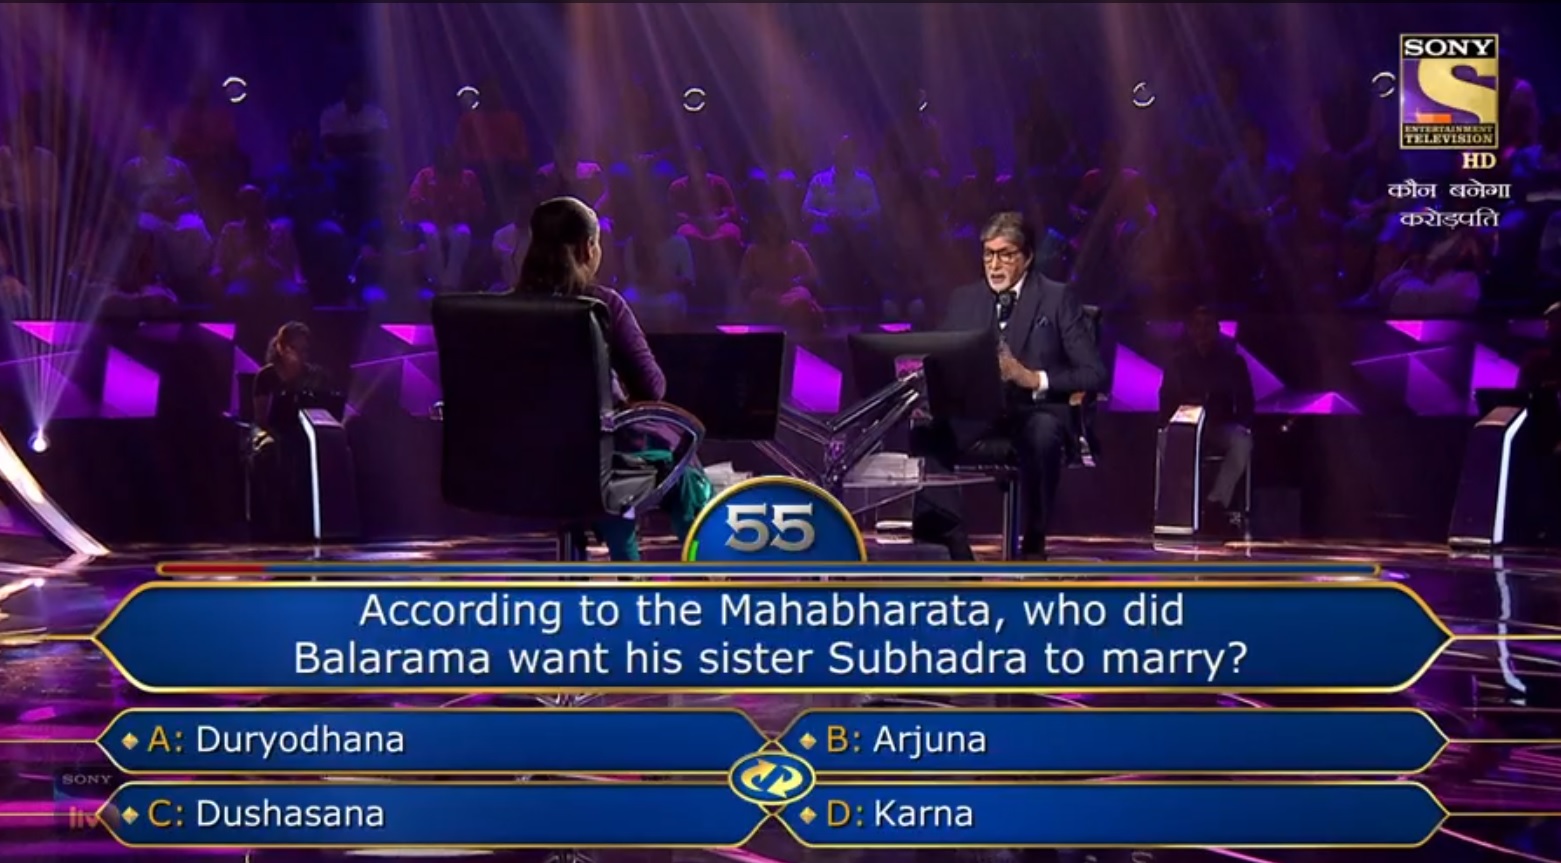 Ques : According to the Mahabharata, who did Balarama want his sister Subhadra to marry?